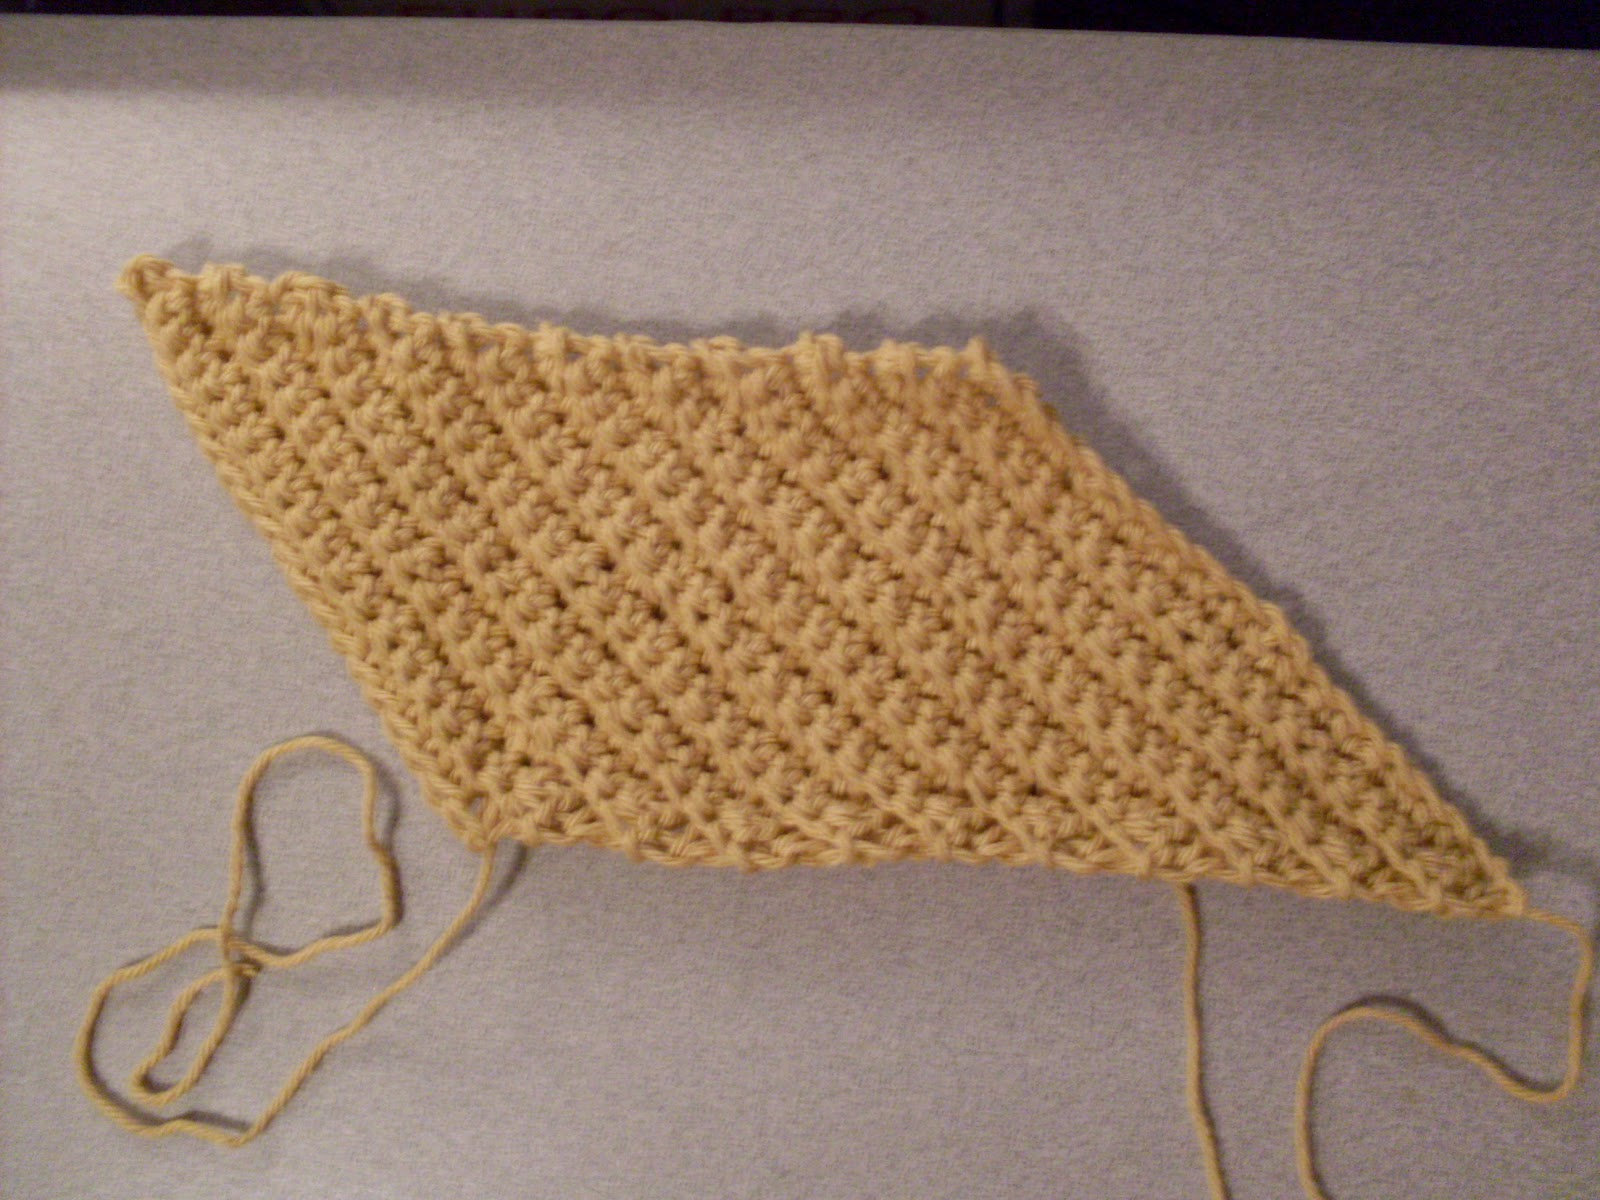 Crochet Spiral Scrubbie Pattern Spiral Scrub Cathartic Crafting